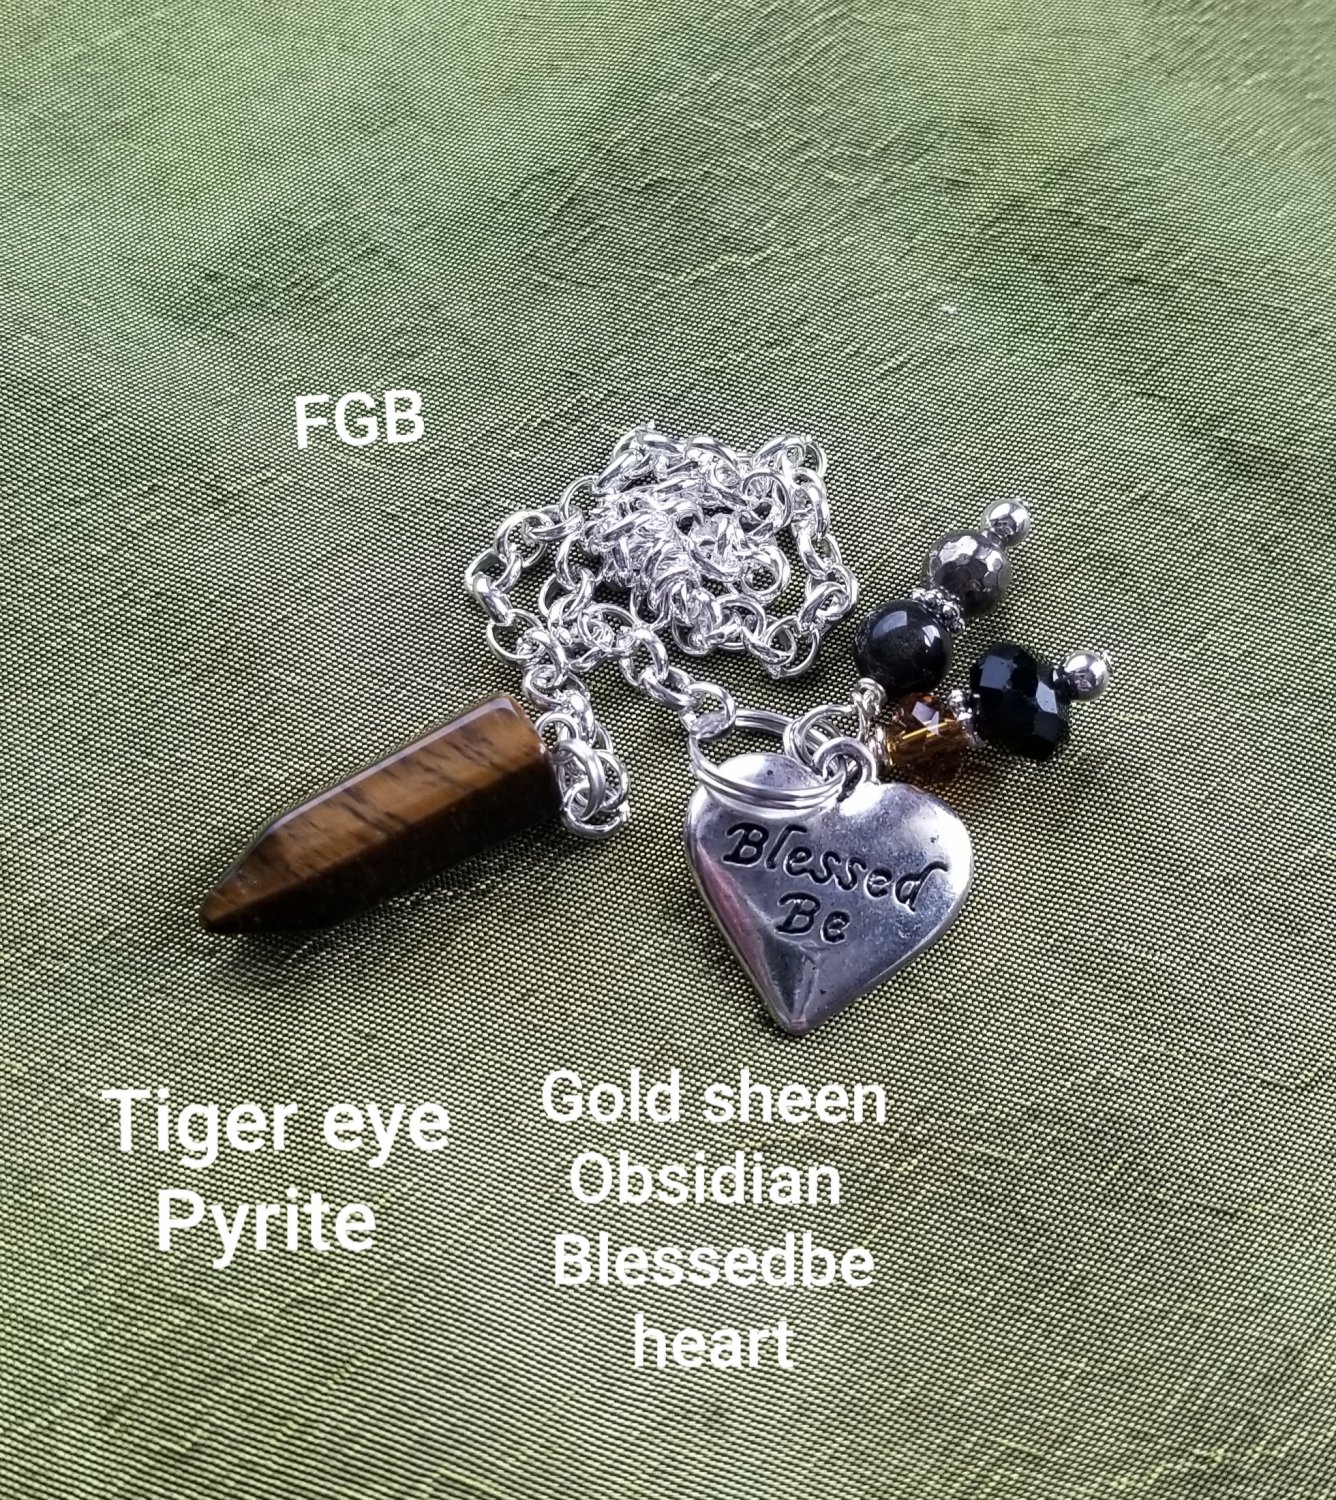 Tigereye Blessedbe pendulum